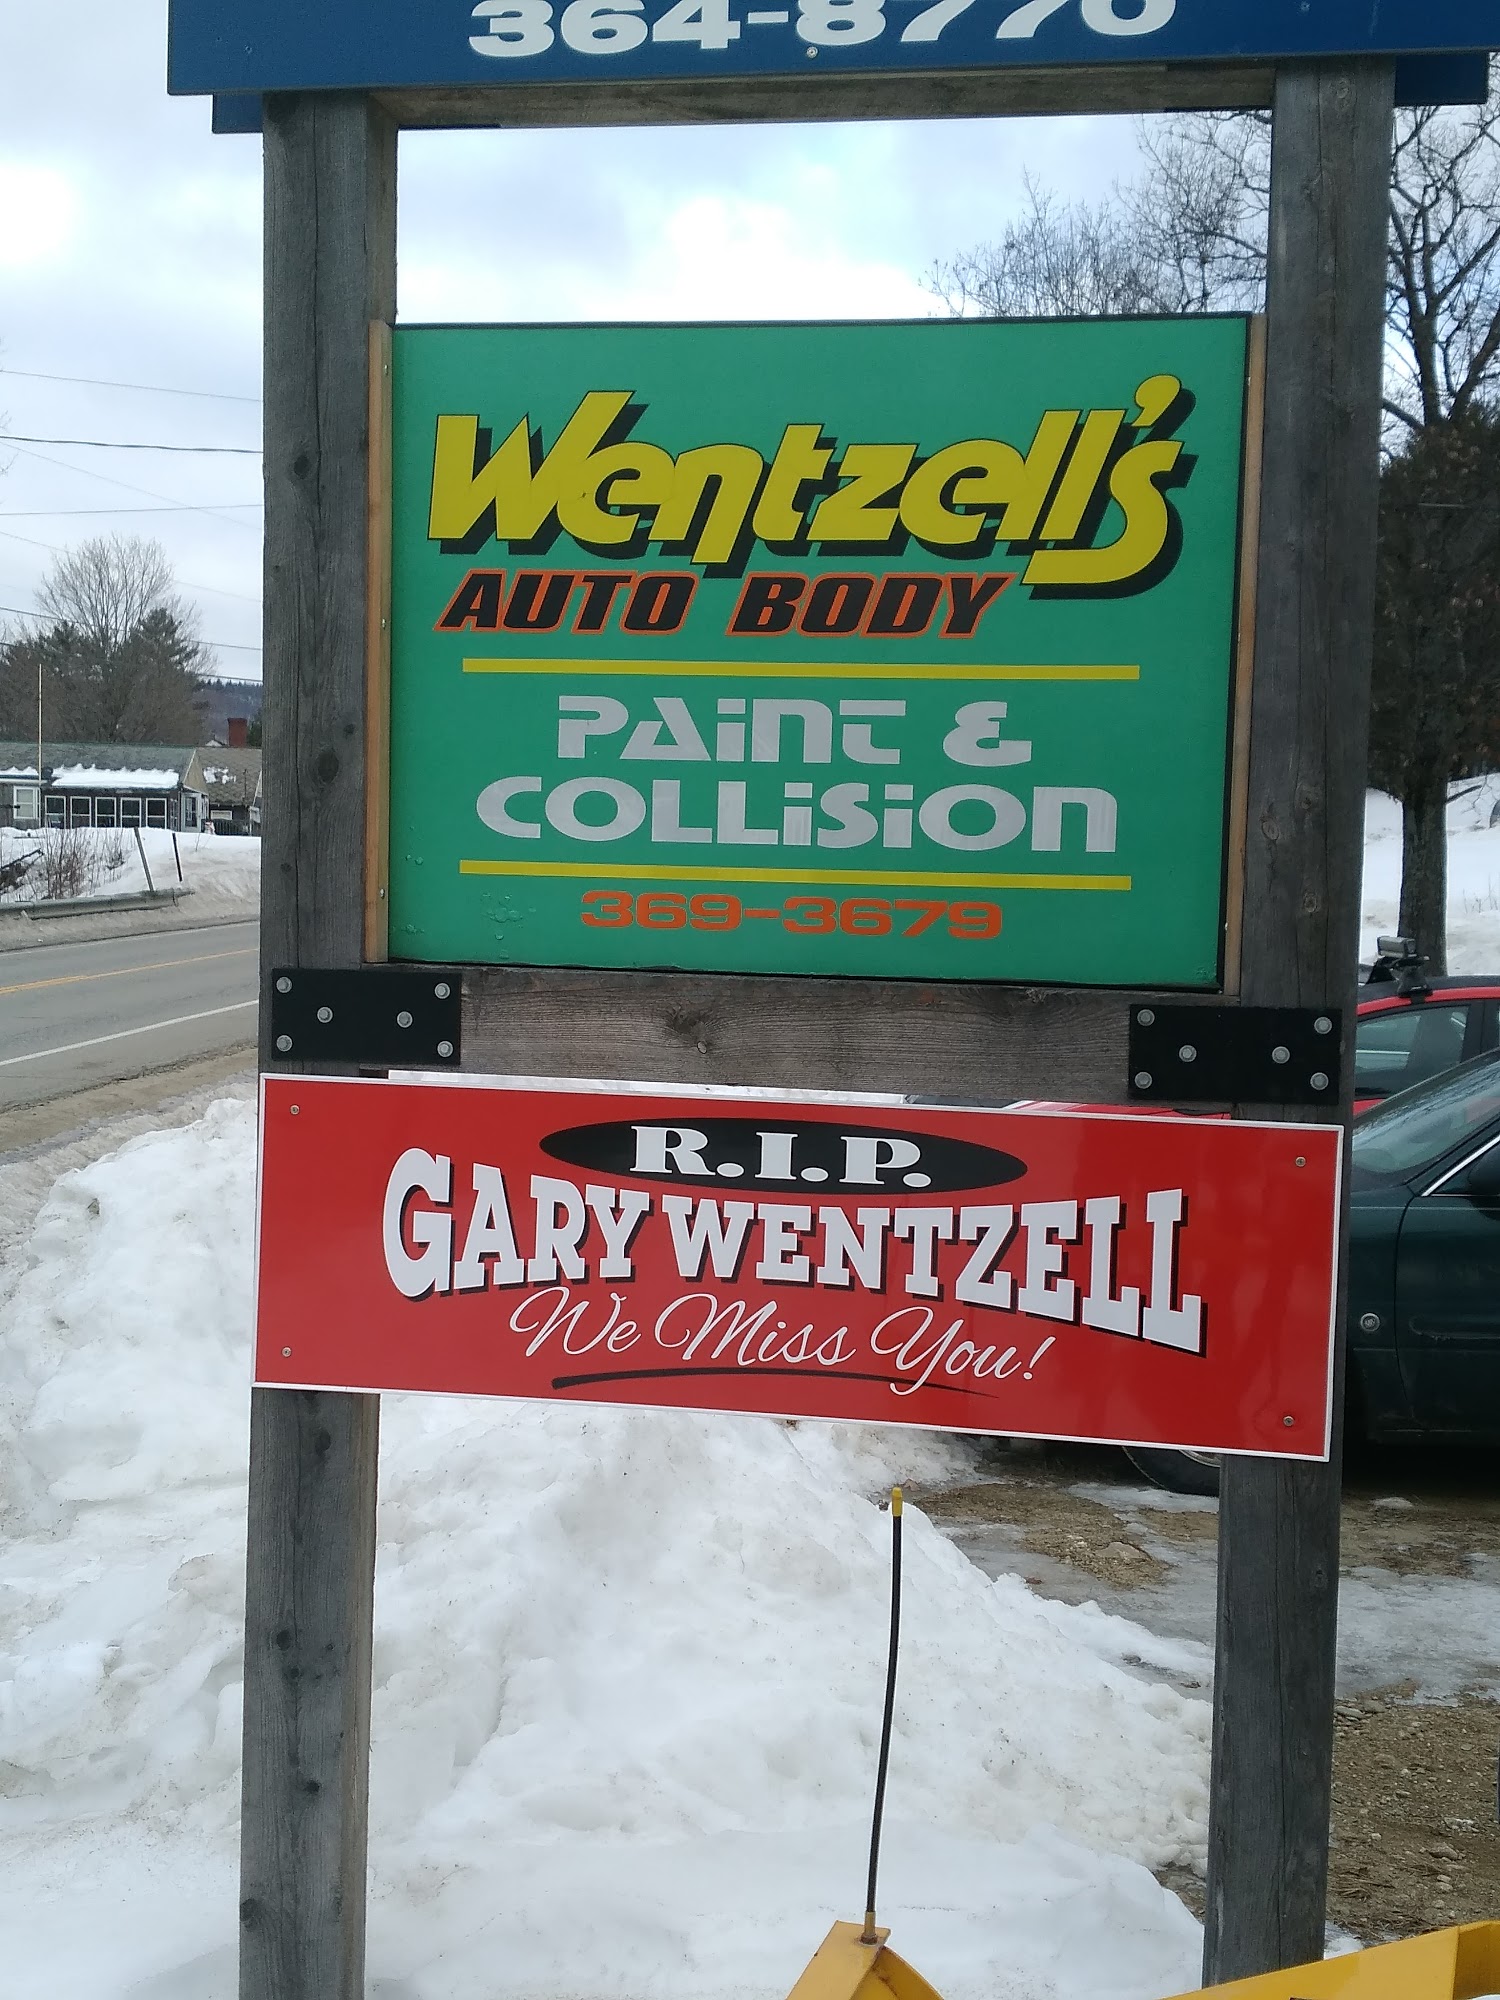 Wentzell's Auto Body